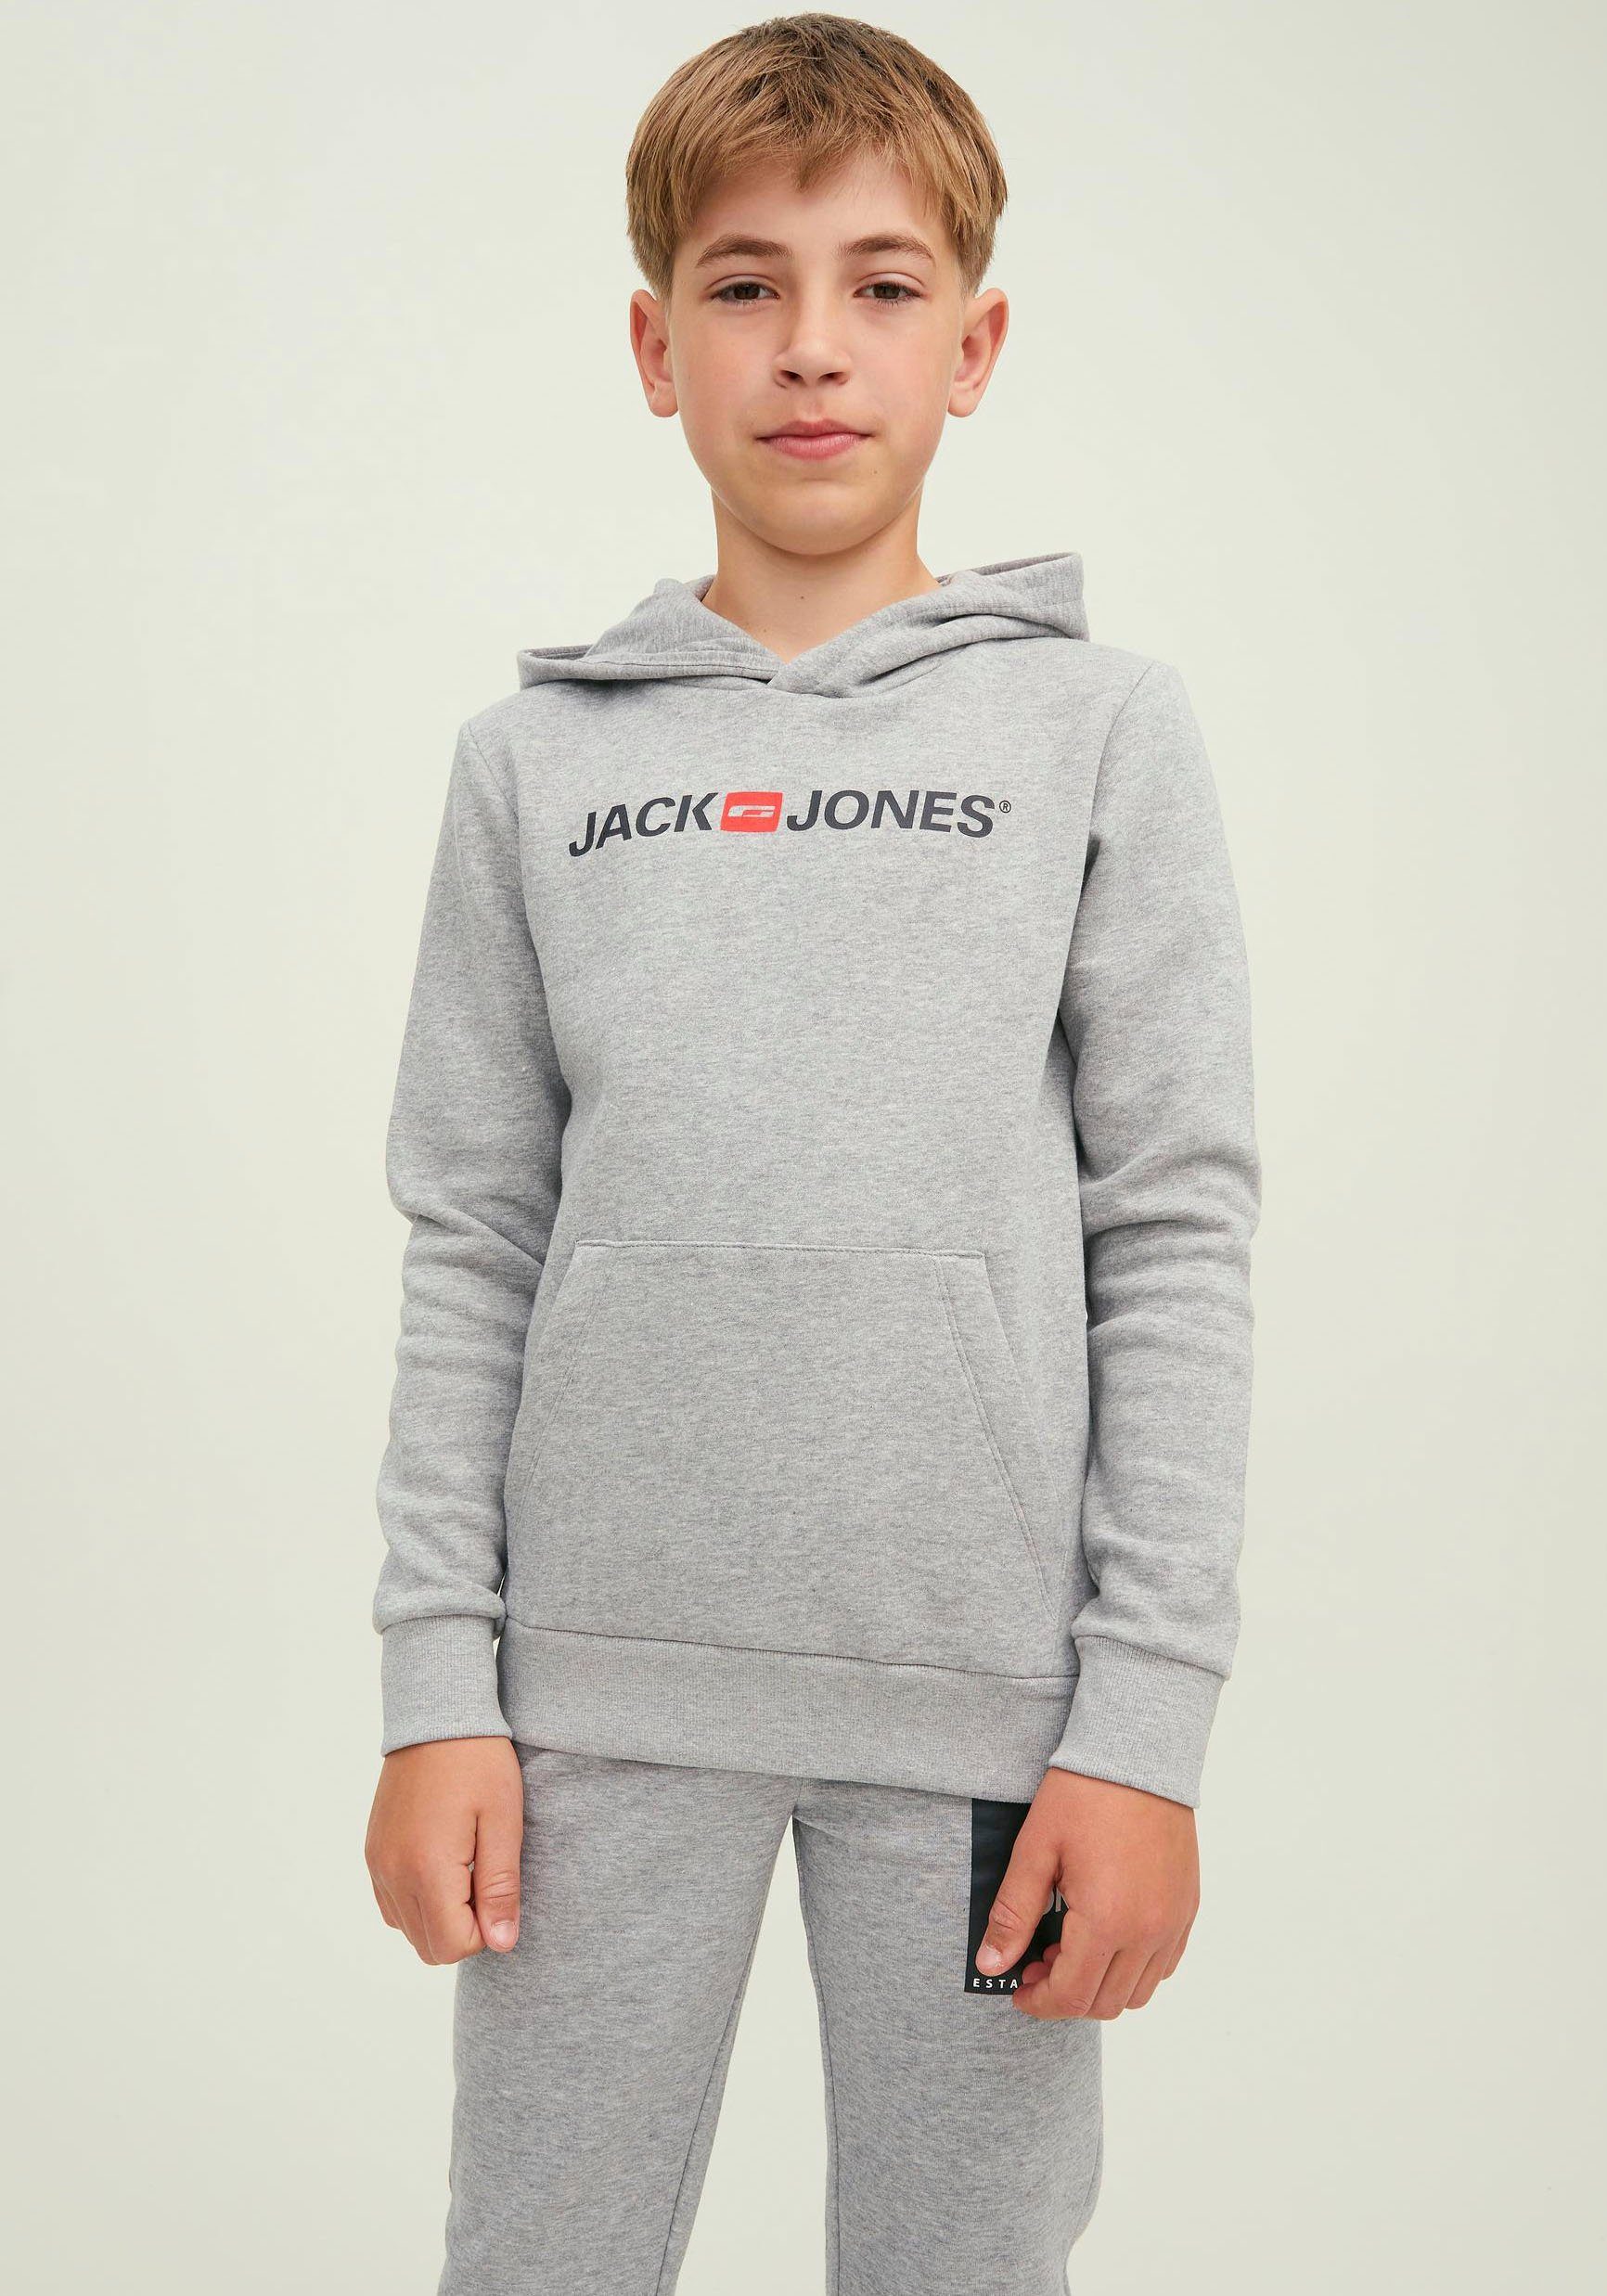 & Kapuzensweatshirt Junior Jones Jack unbekannt